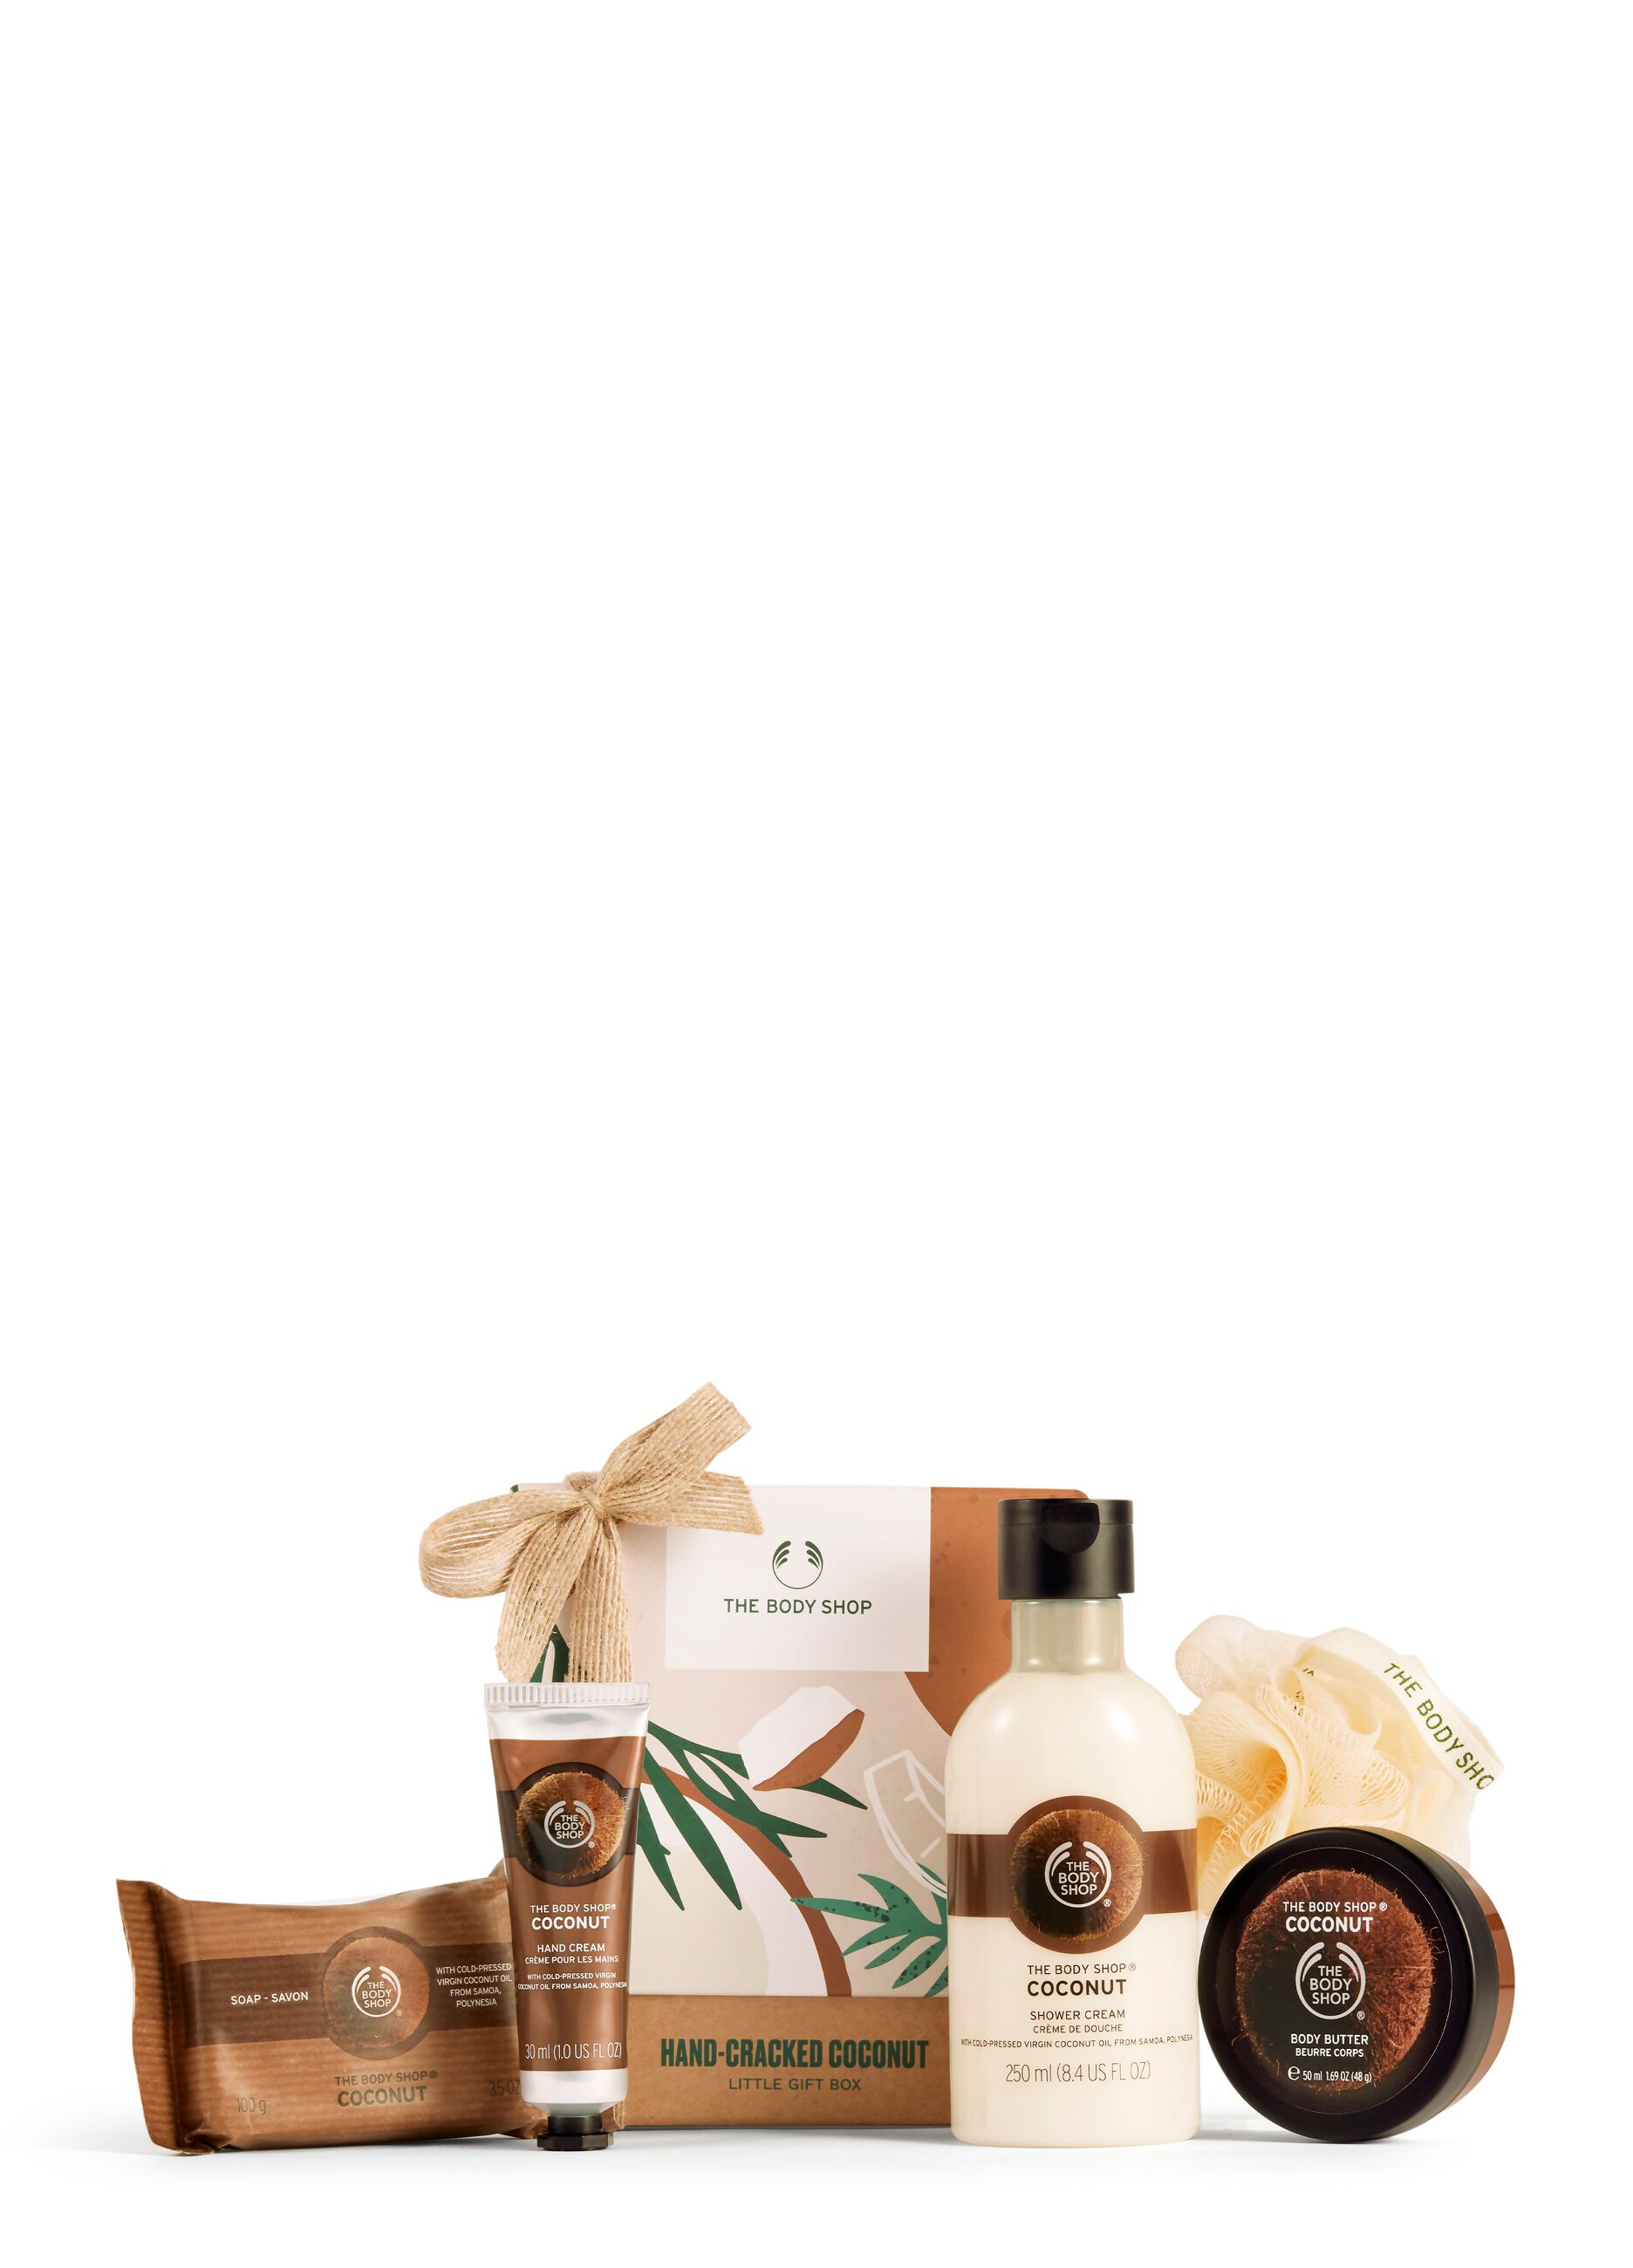 The Body Shop small coconut gift box